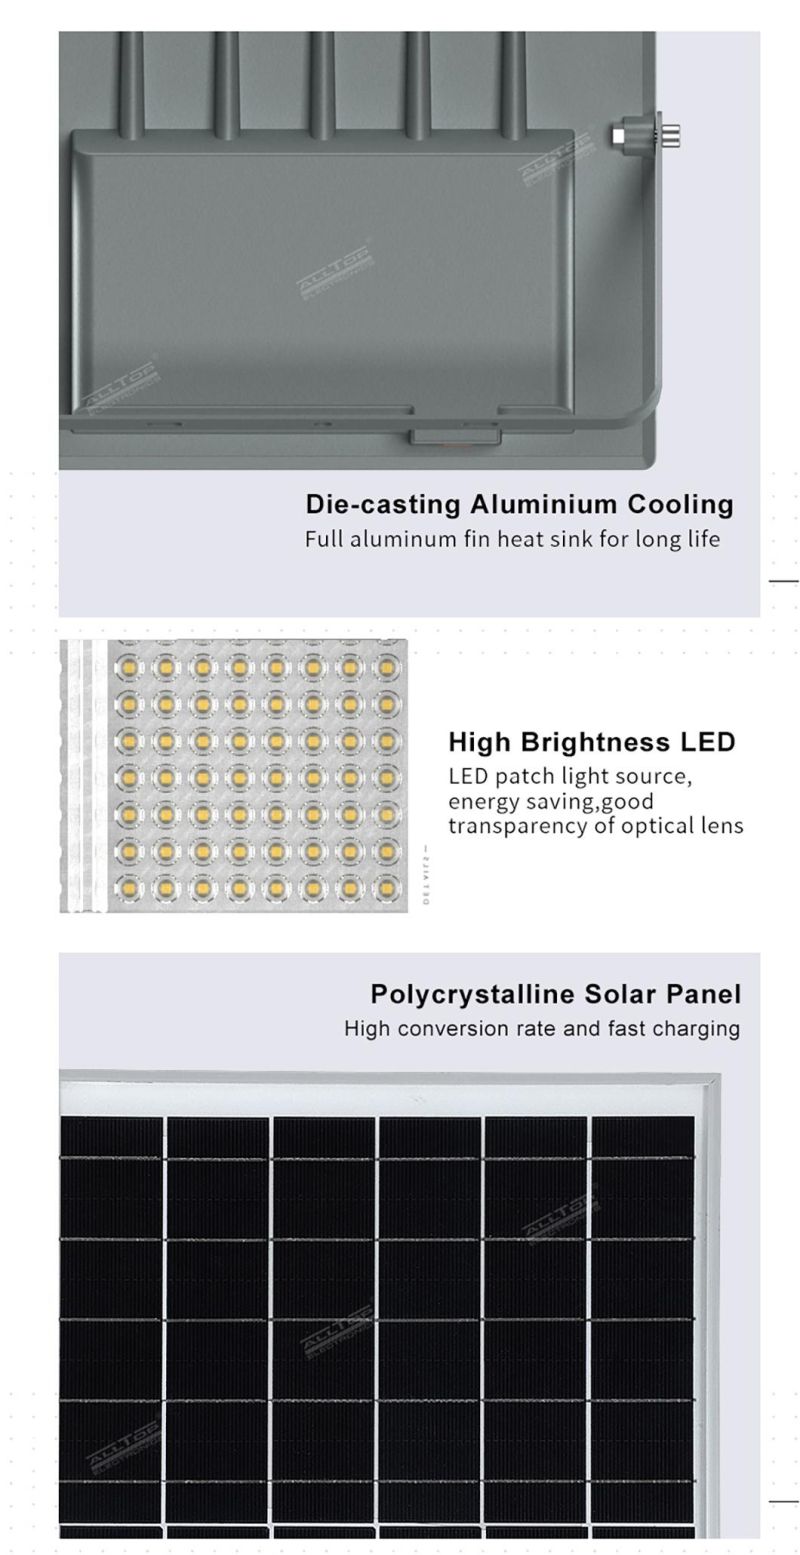 Alltop High Performance SMD Aluminum 150W Waterproof IP65 Outdoor Solar Panel LED Flood Lights